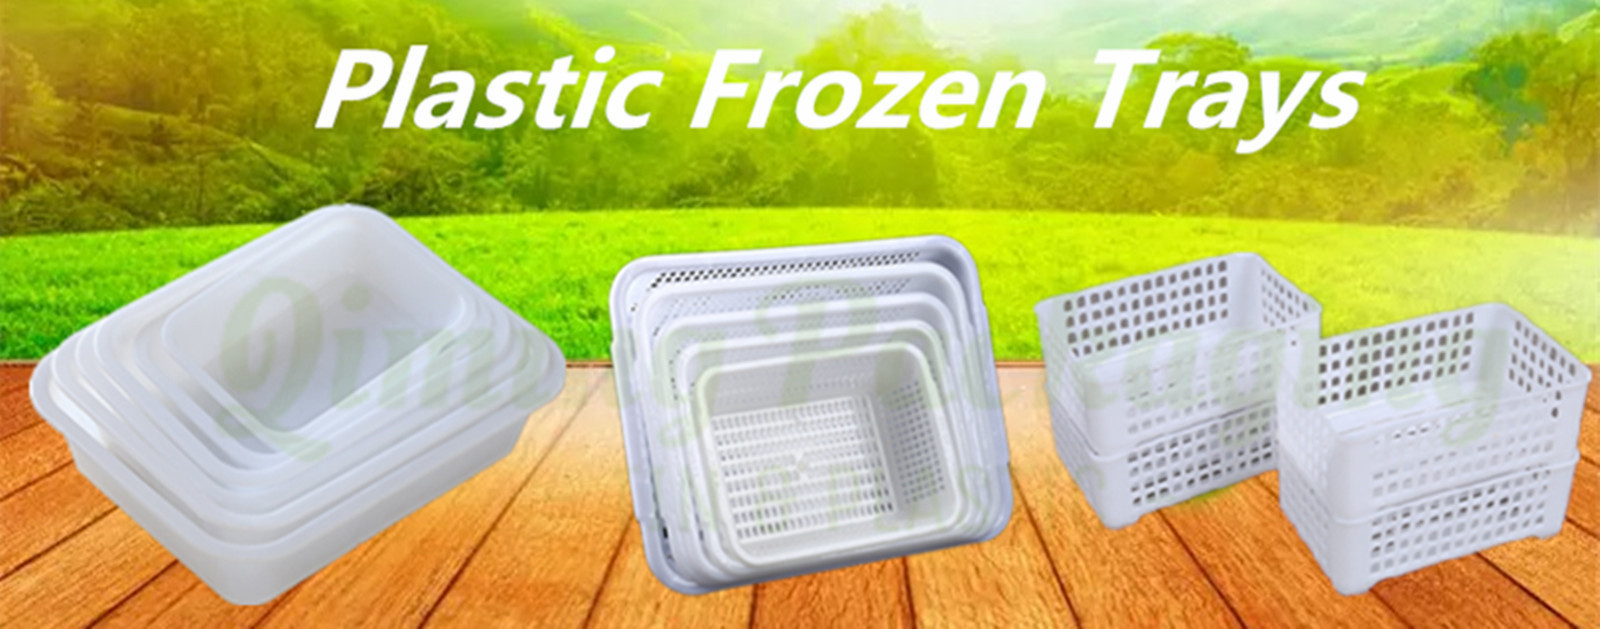 plastic frozen trays